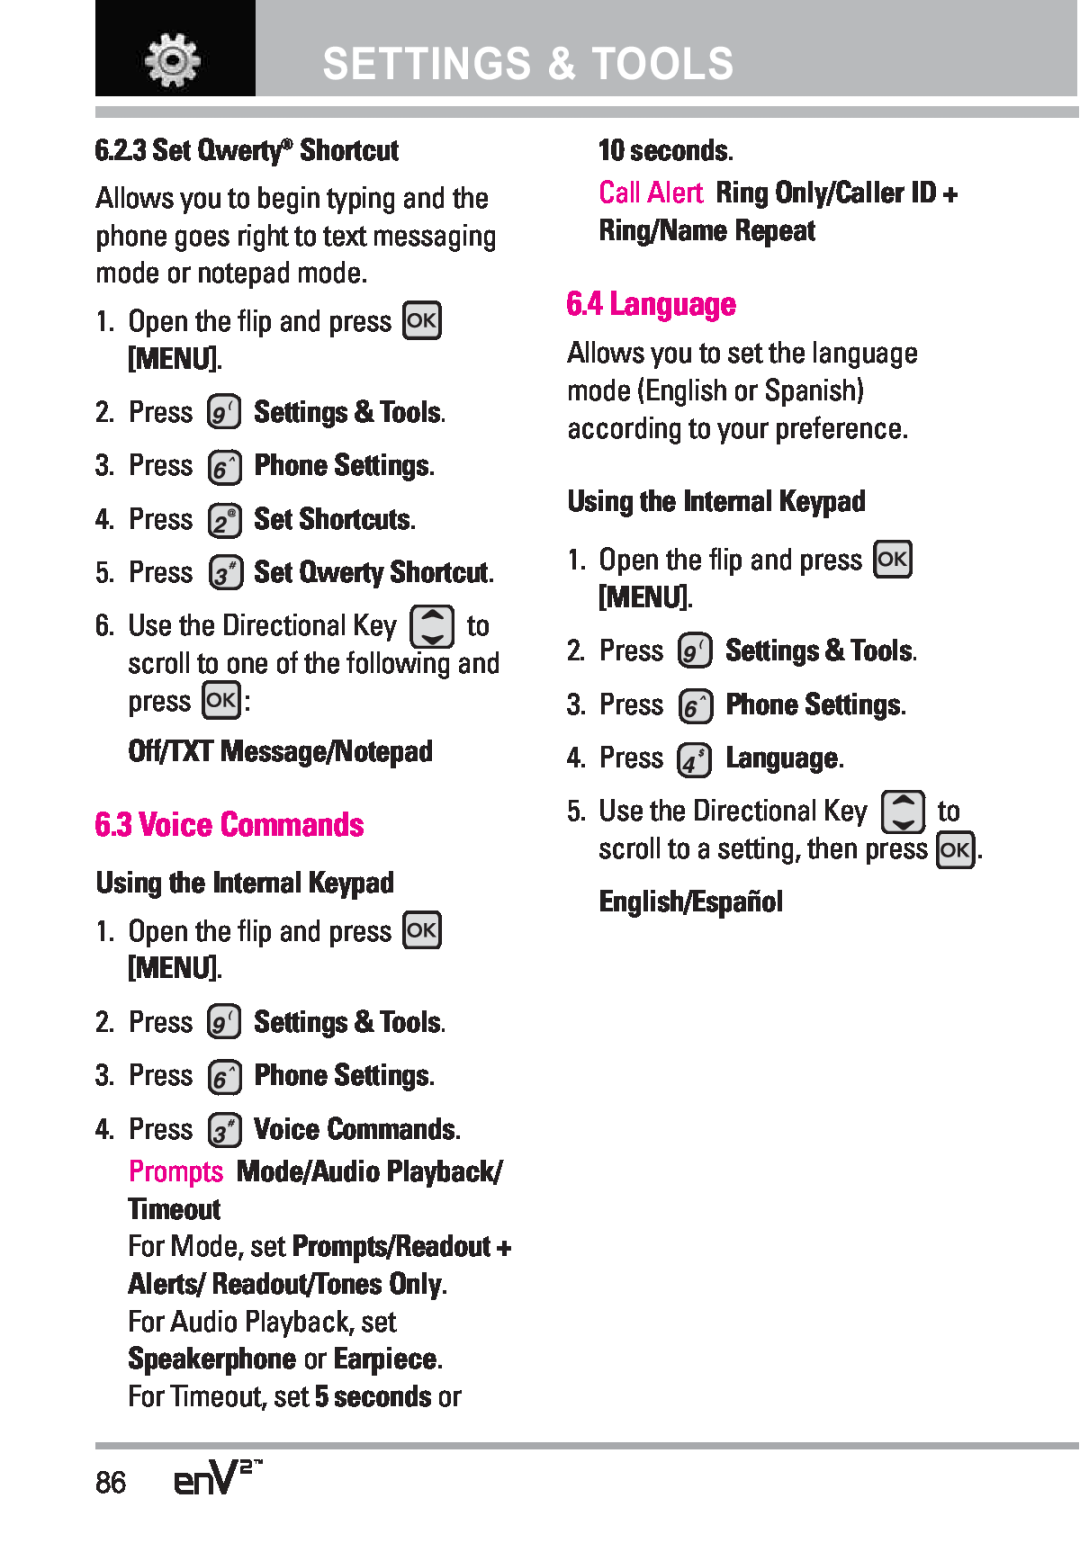 LG Electronics EnV2 manual Voice Commands, Language, Settings & Tools, Set Qwerty Shortcut, Press Set Shortcuts, Timeout 